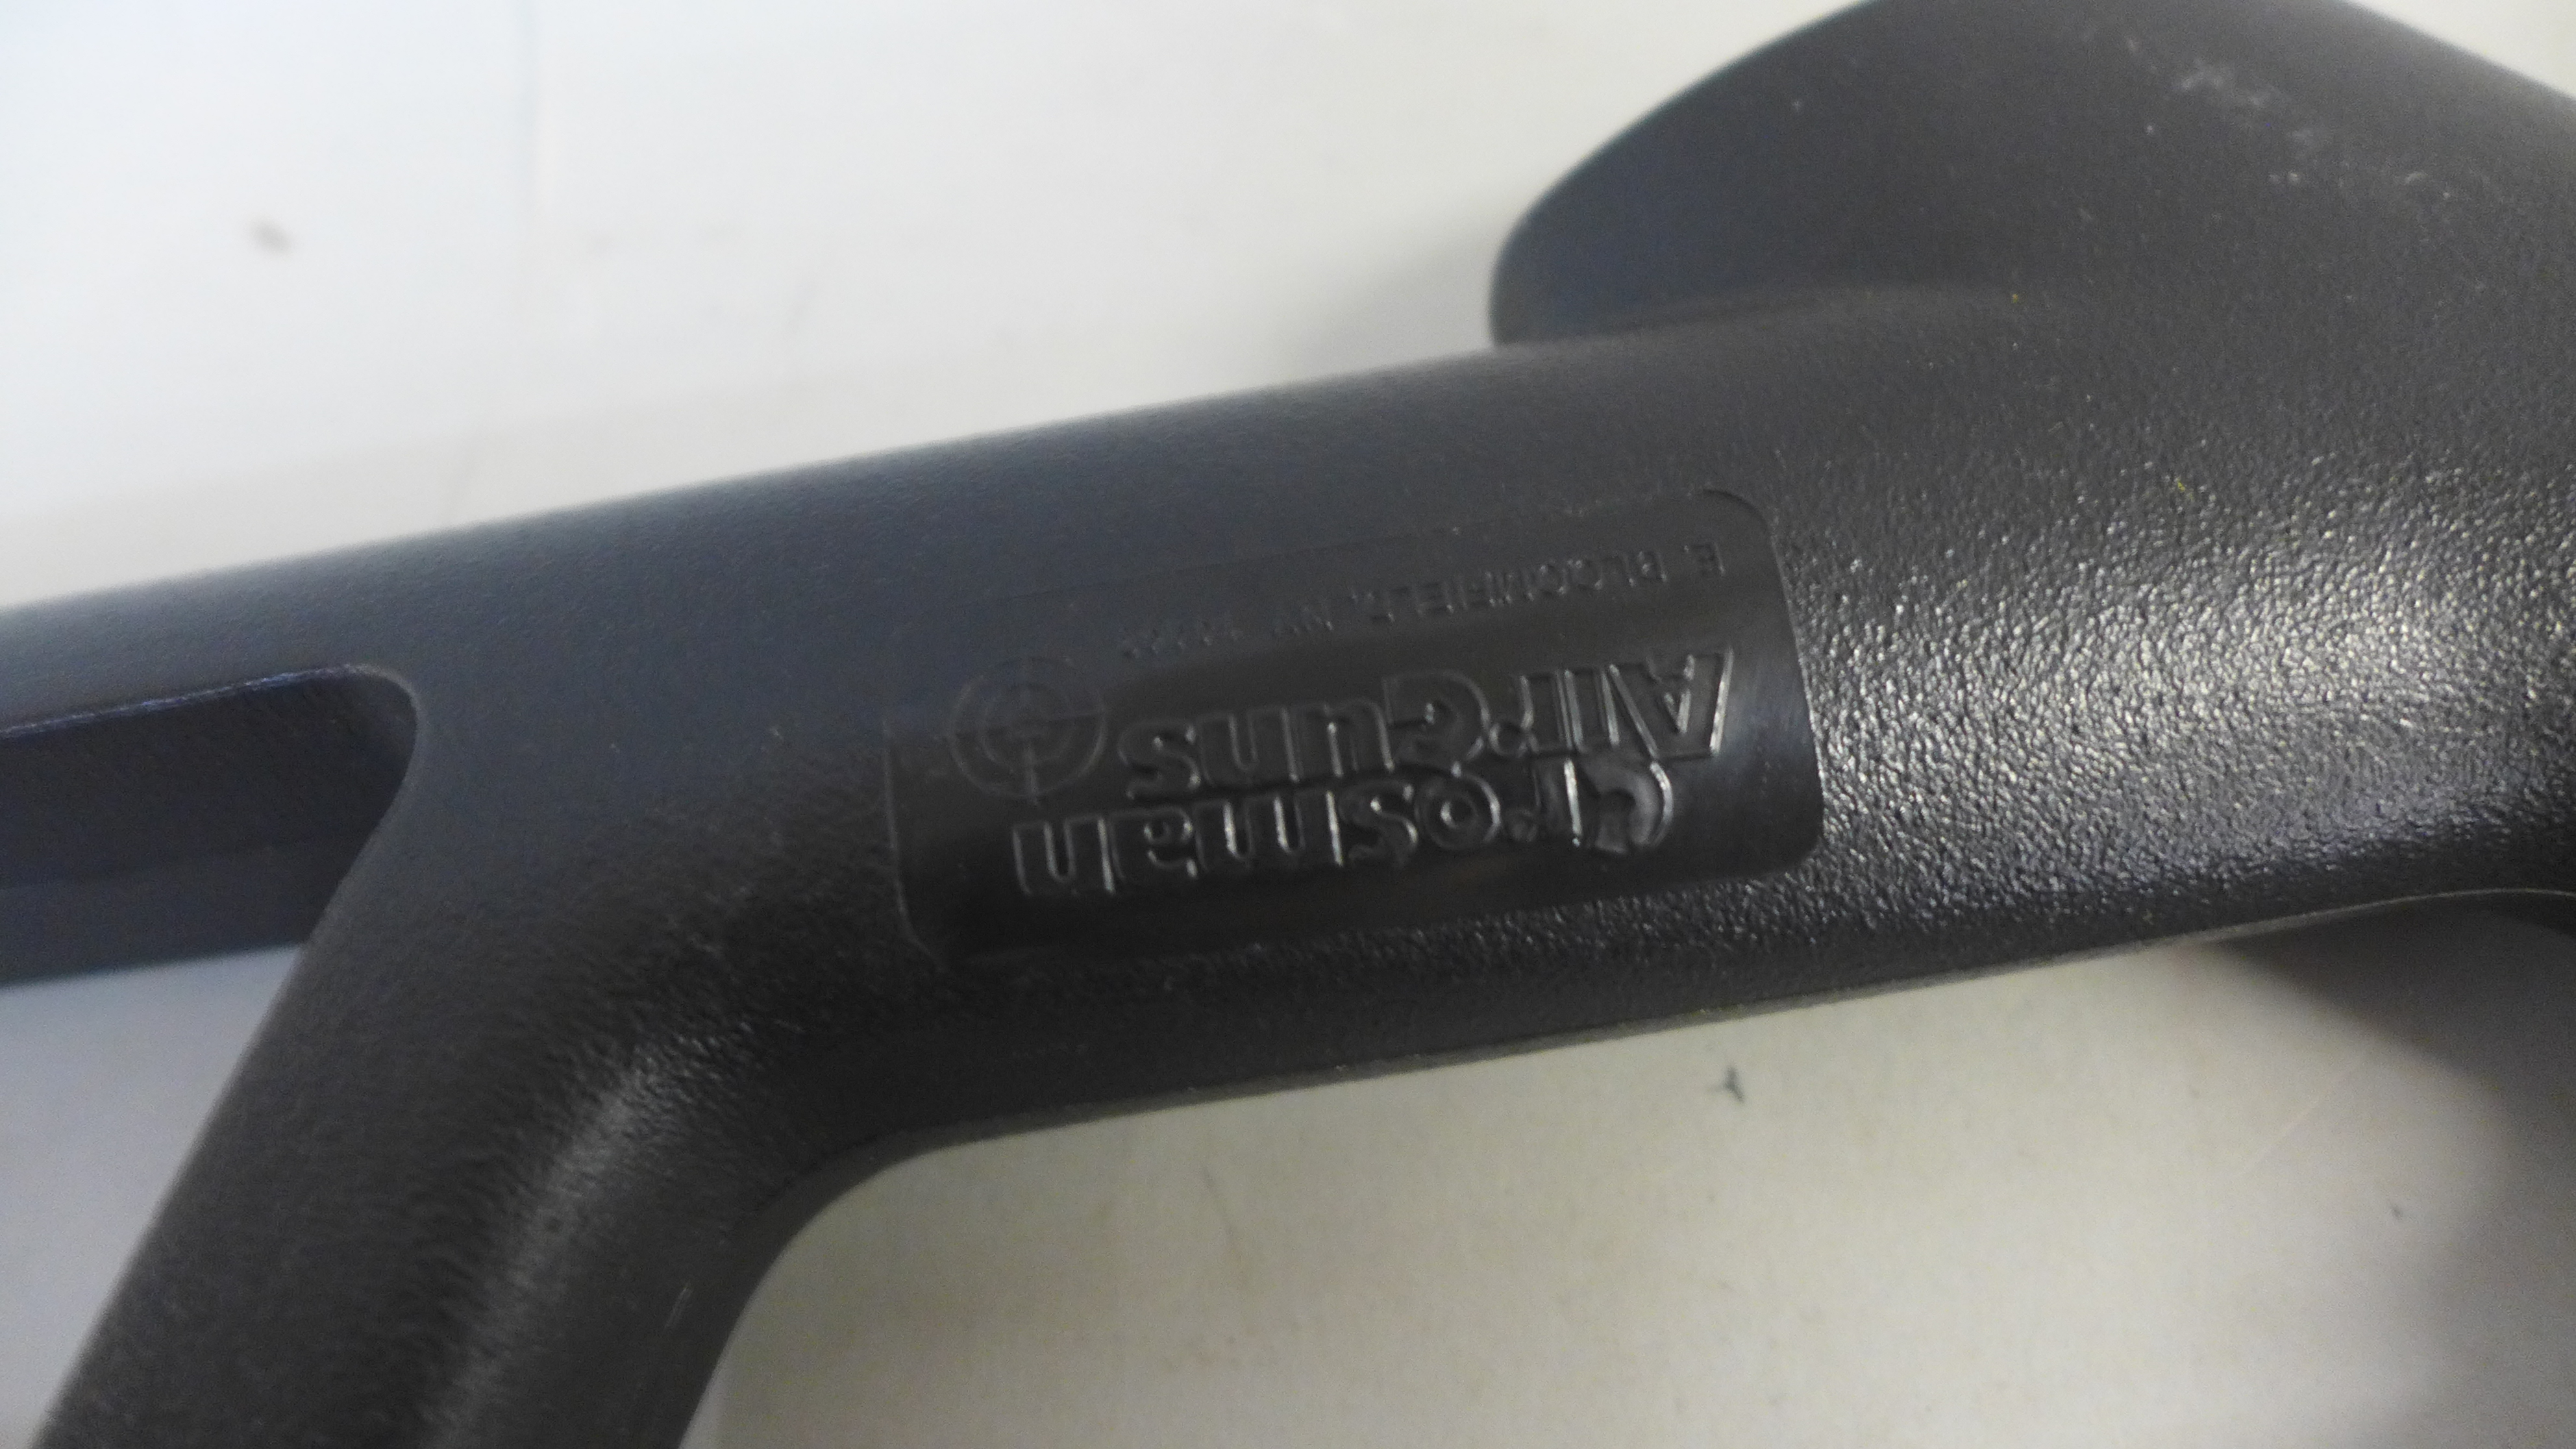 A Crosman model 2250B single shot CO2 target shooting air gun, 0.22 calibre, with owner's manual - Image 5 of 5